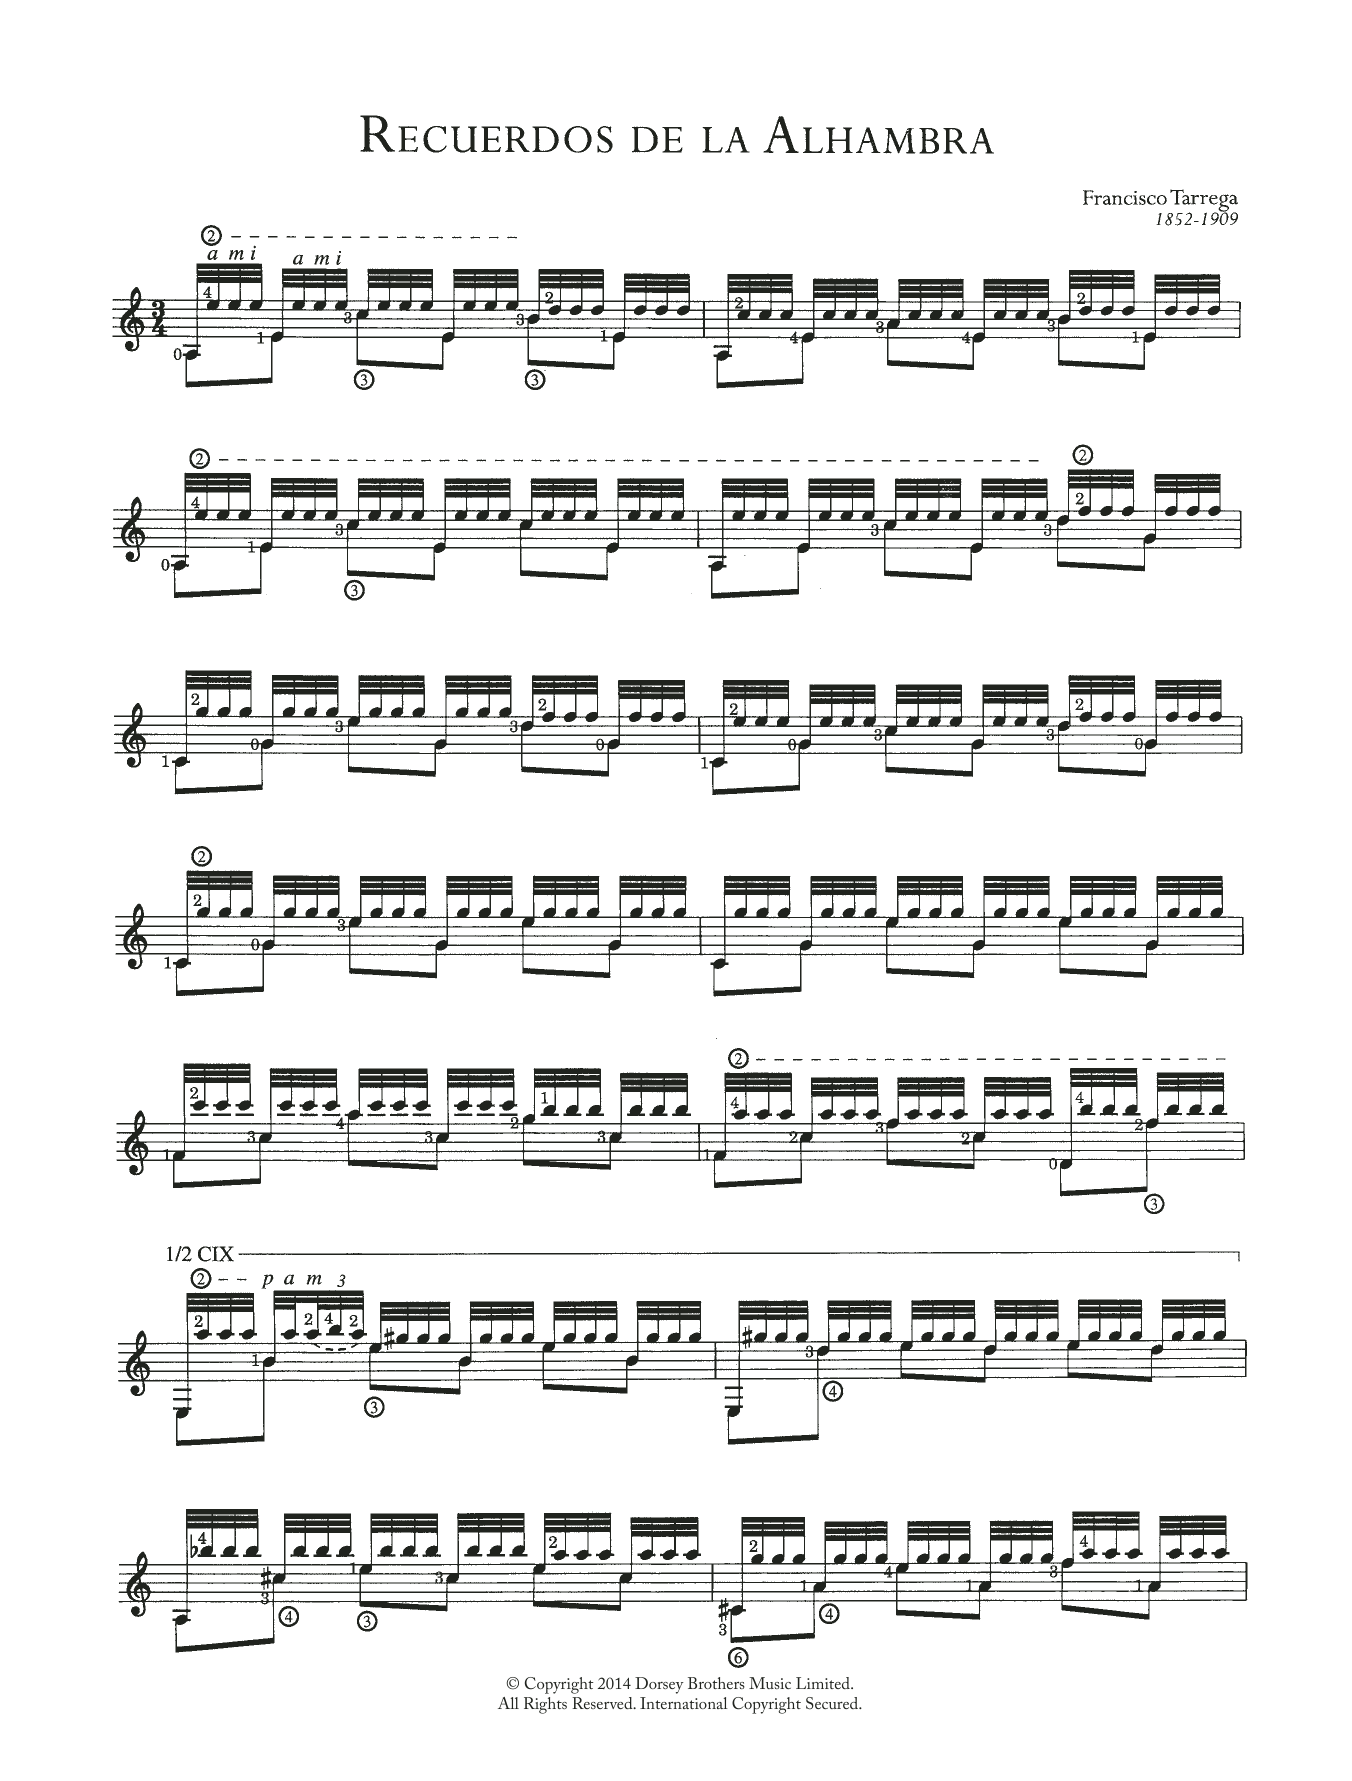 Francisco Tárrega Recuerdos de la Alhambra Sheet Music Notes & Chords for Solo Guitar - Download or Print PDF